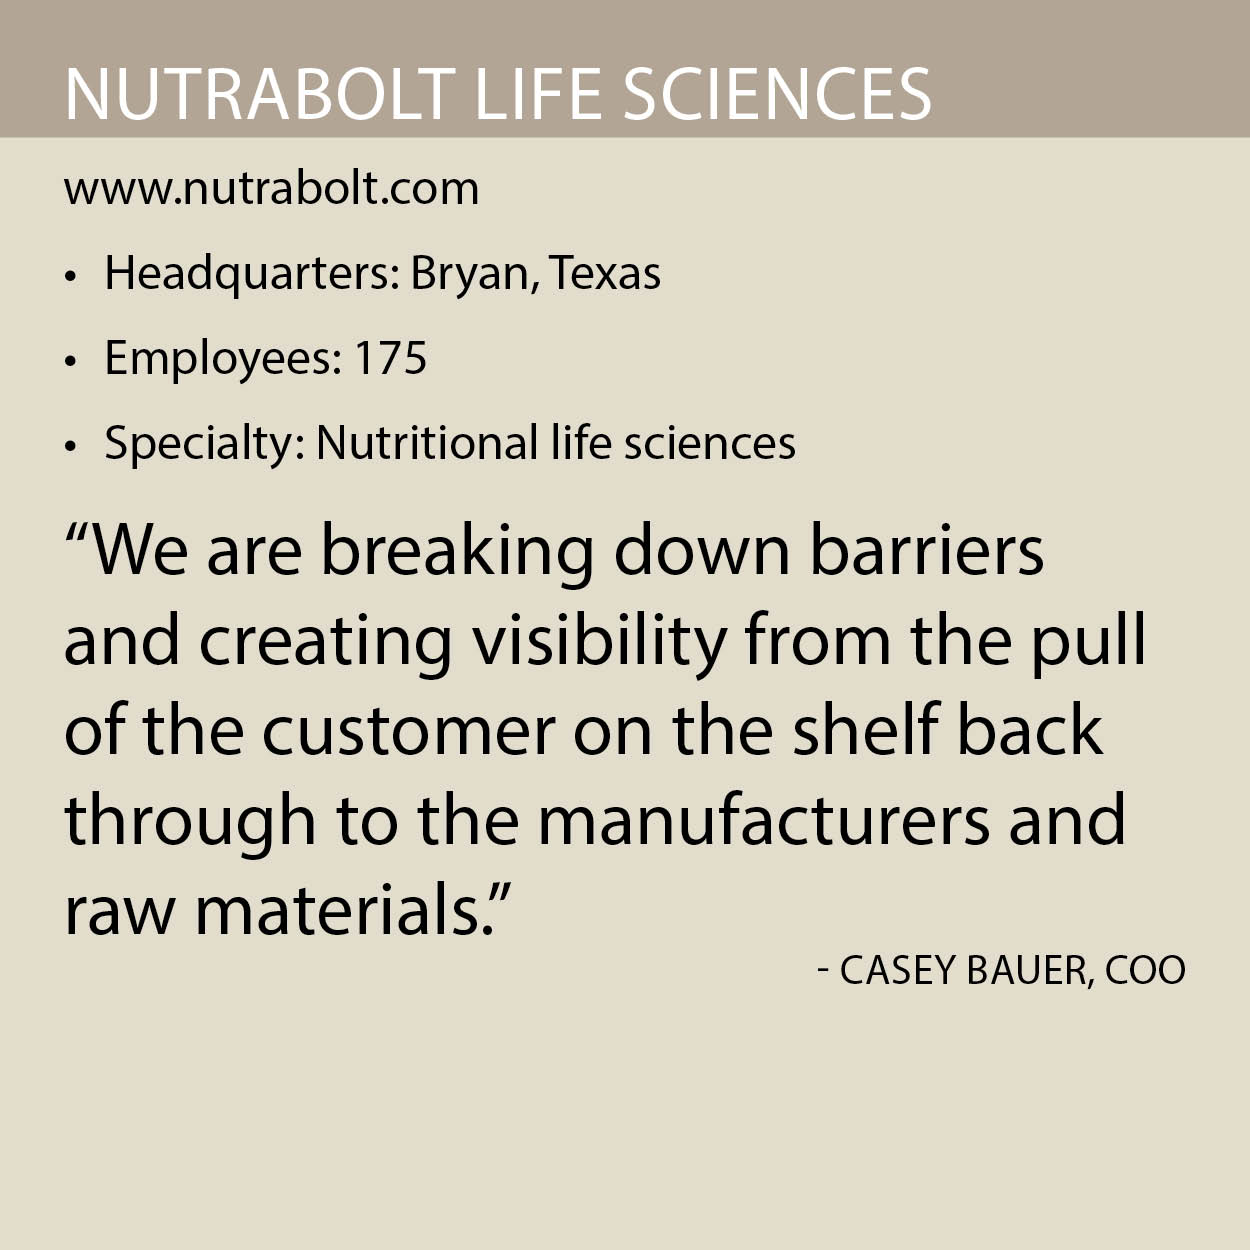 Nutrabolt Life Sciences fact box